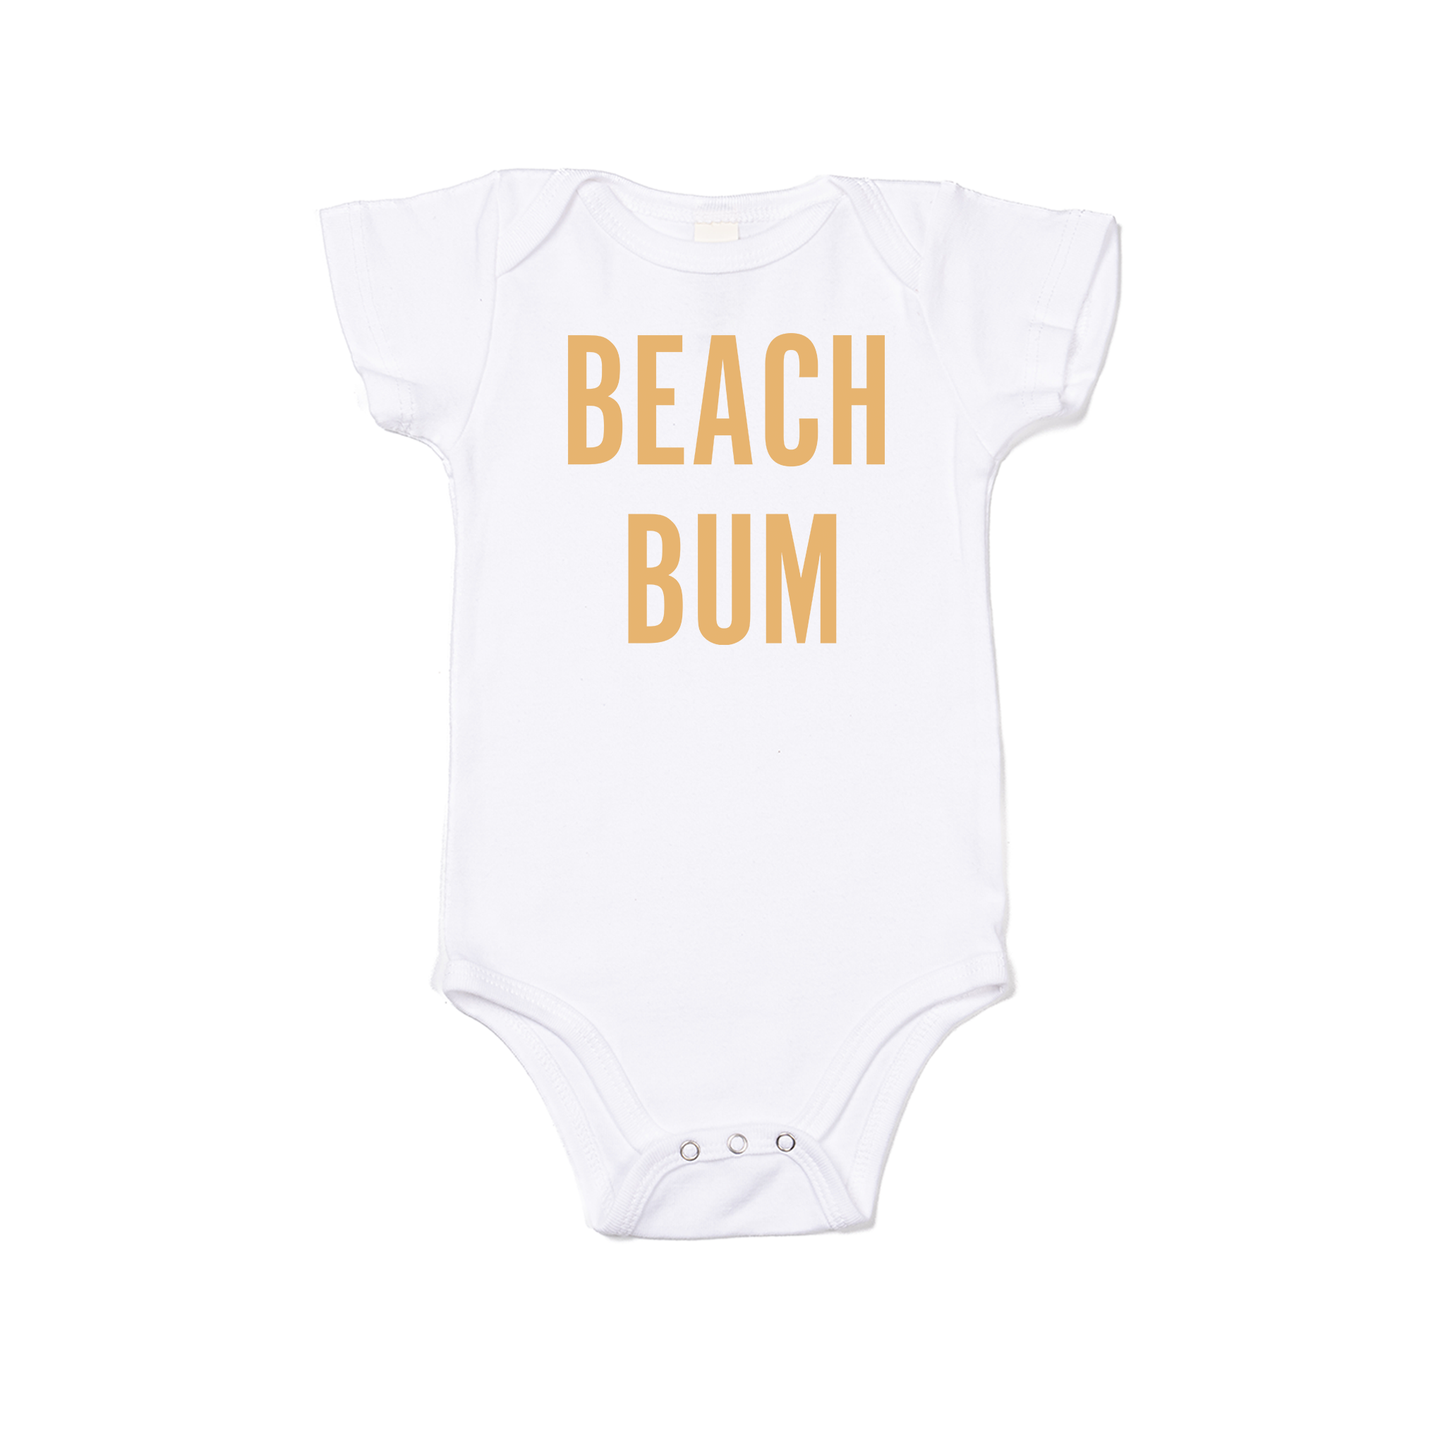 BEACH BUM (Mustard) - Bodysuit (White, Short Sleeve)